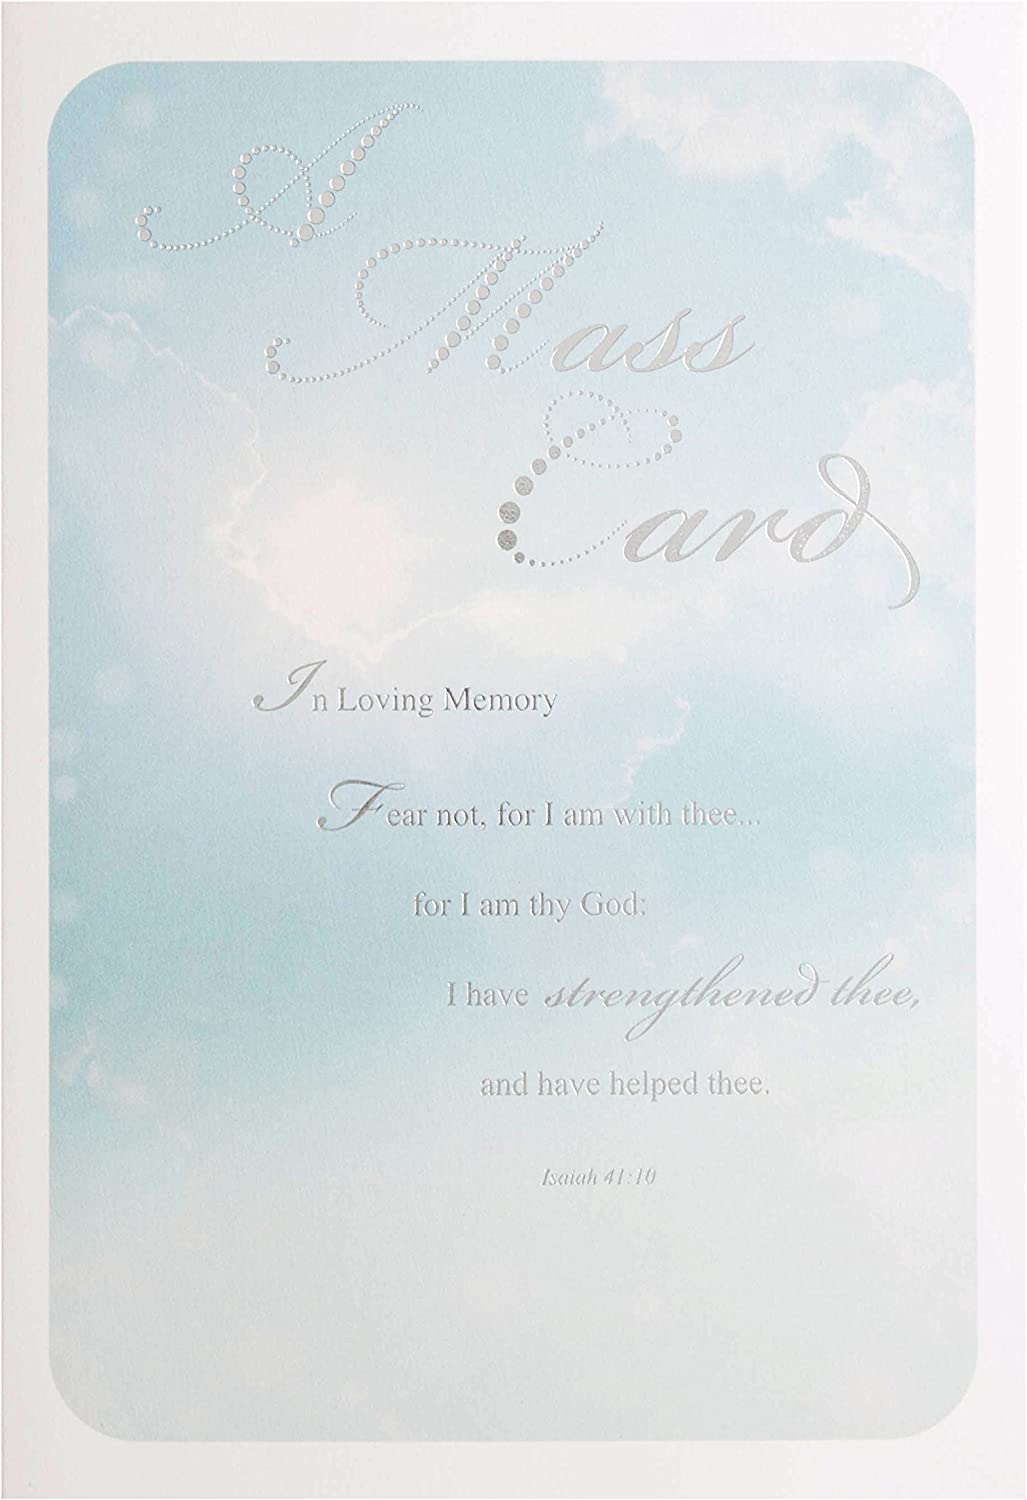 Mass Offering Card - "Loving Memory"